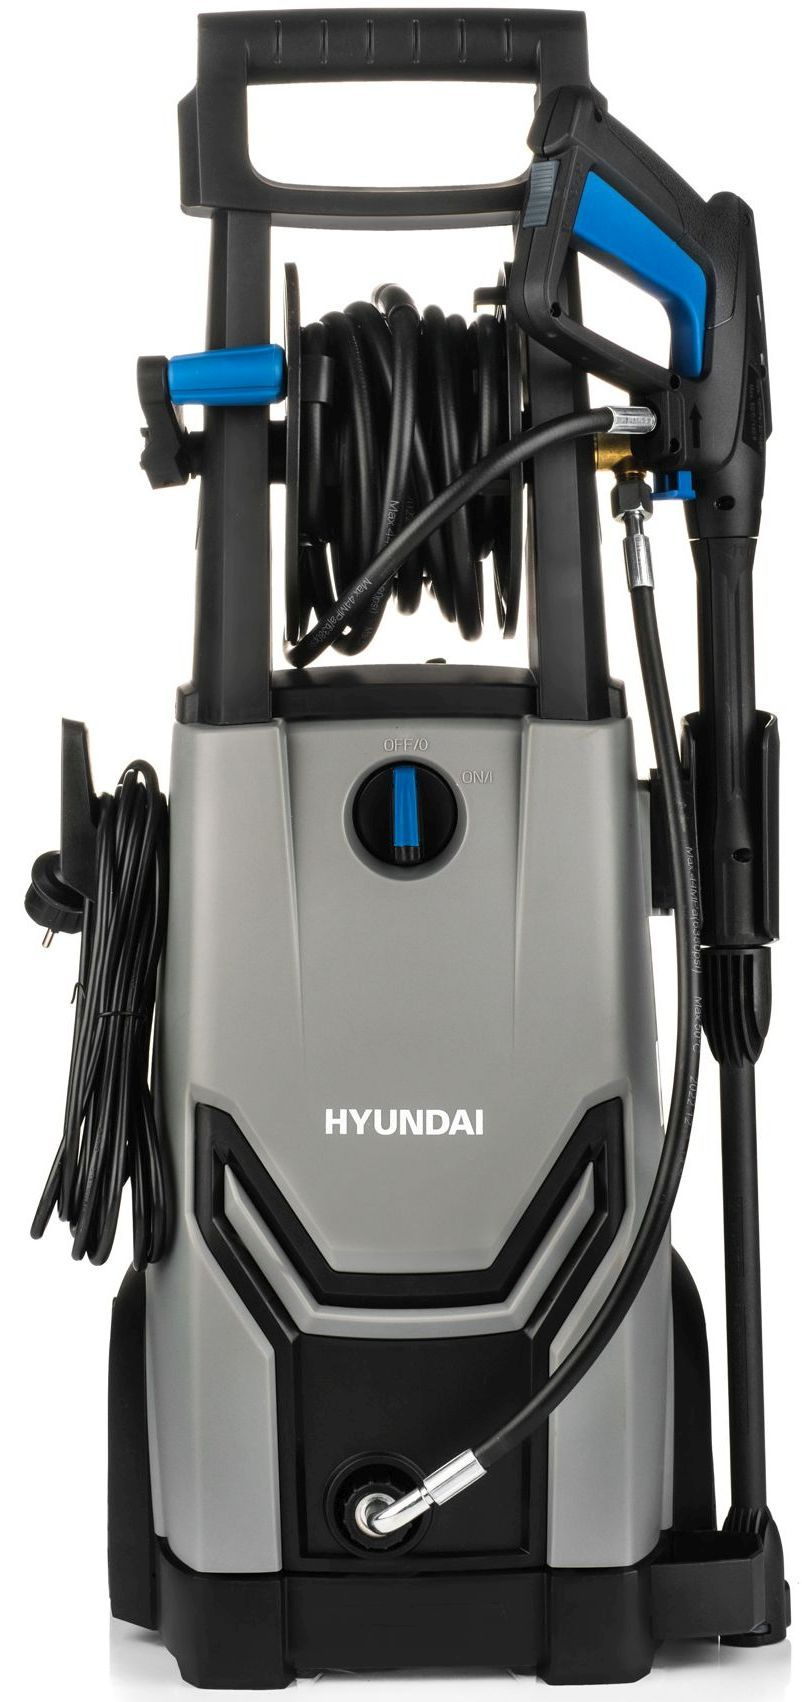 Hyundai hhw 185 600. Мойка высокого давления Hyundai HHW 185-600. Минимойка Hyundai HHW 140-450. Мойка высокого давления Хендай 180 525. Запчасти мойки высокого давления Hyundai.